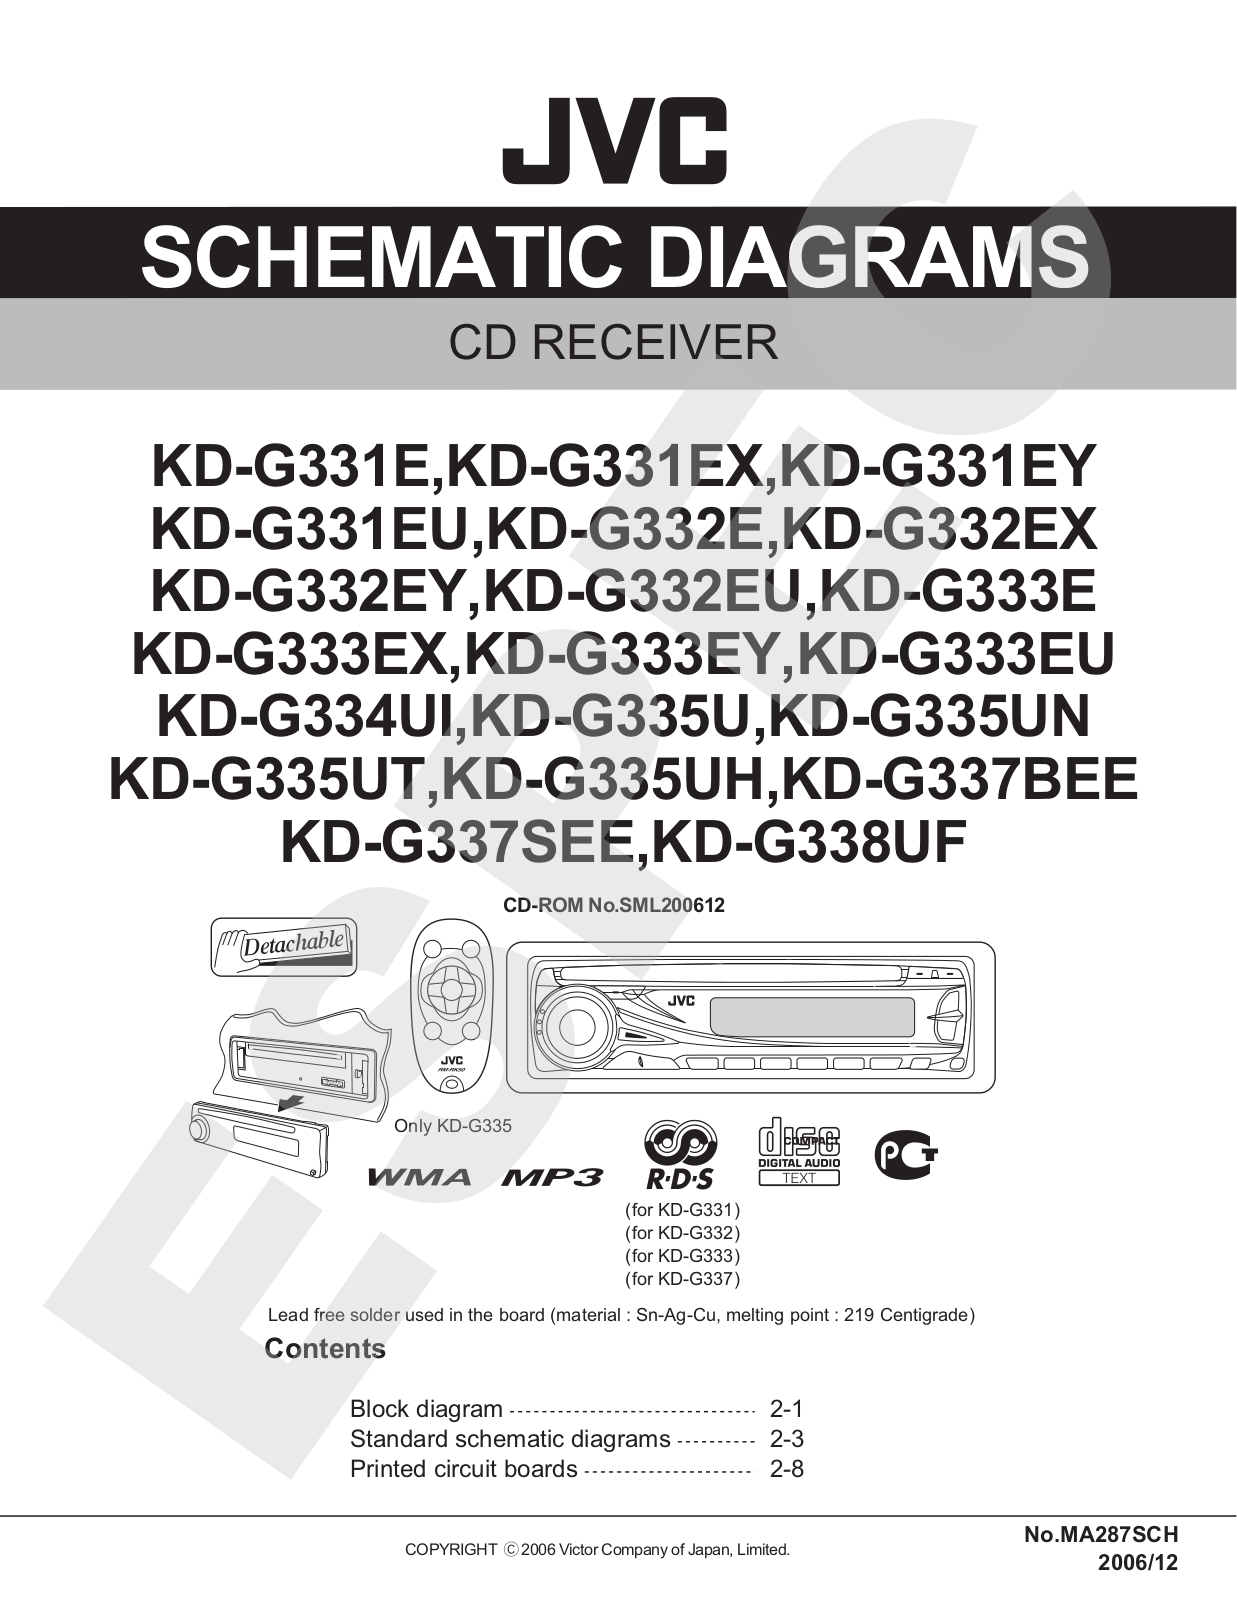 JVC KD-G331, KD-G332, KD-G333, KD-G334, KD-G335 Schematic